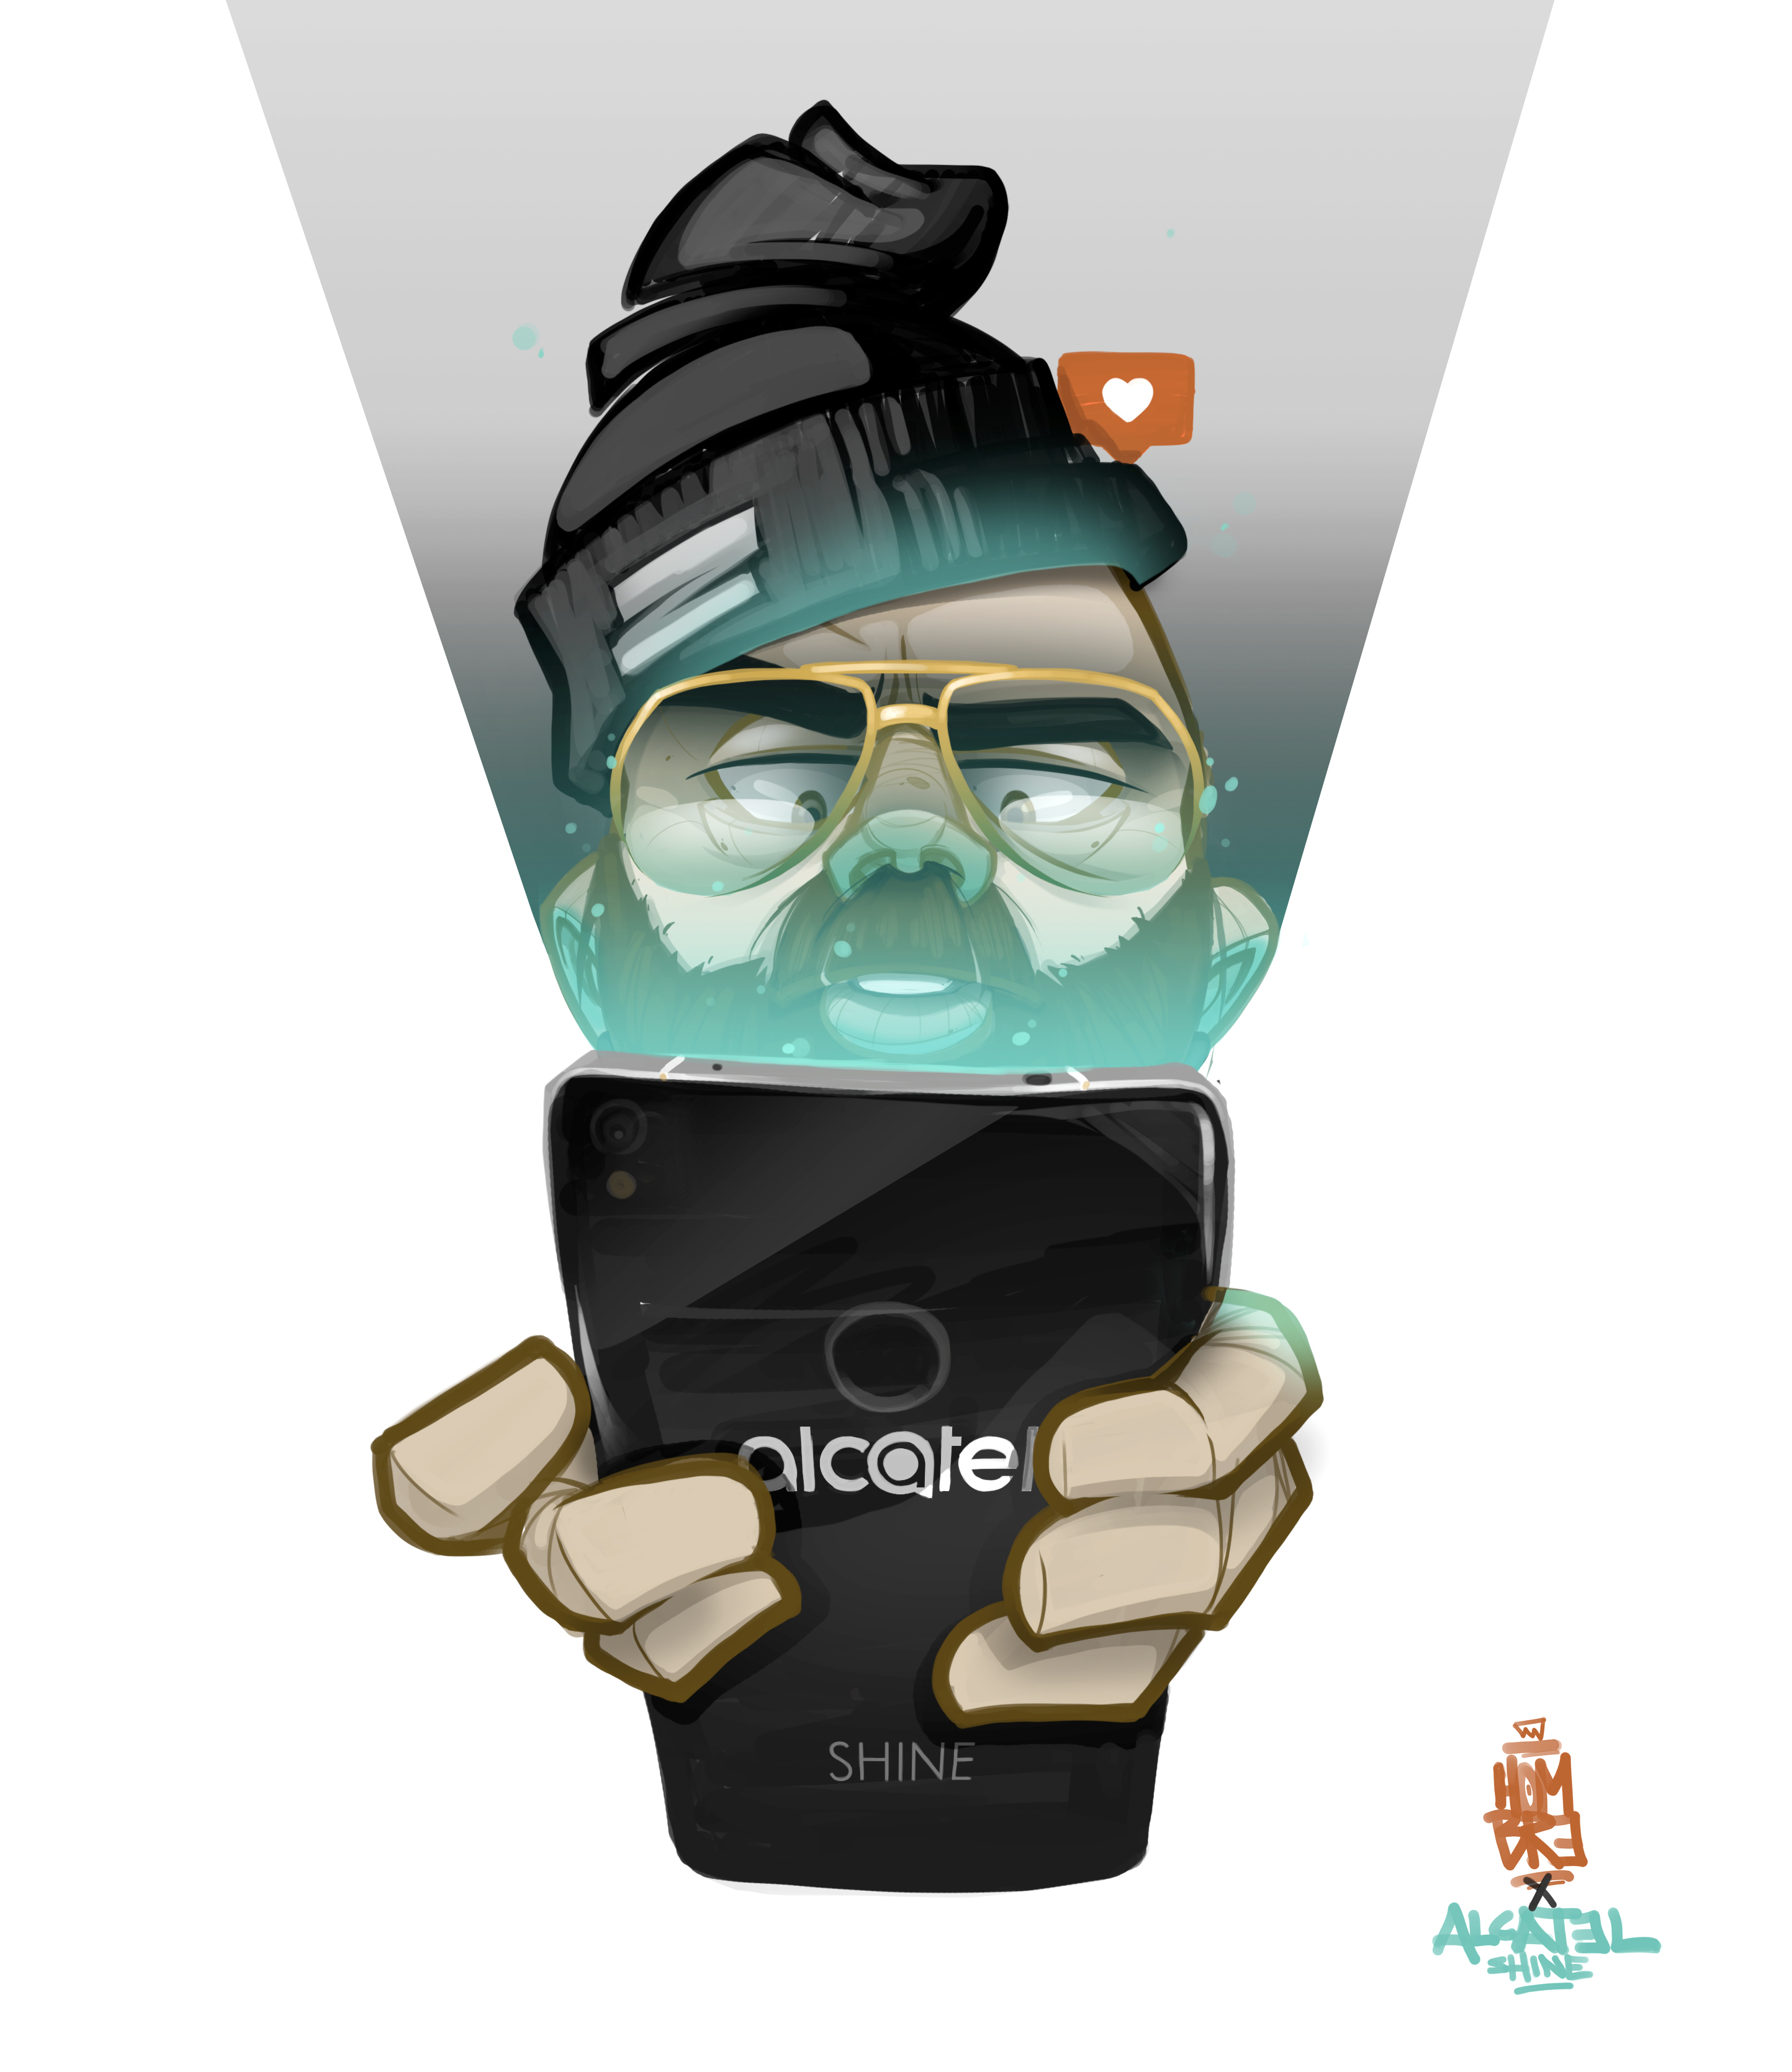 Shine Lite Alcatel Mobile Hombre SUK hypesrus,com